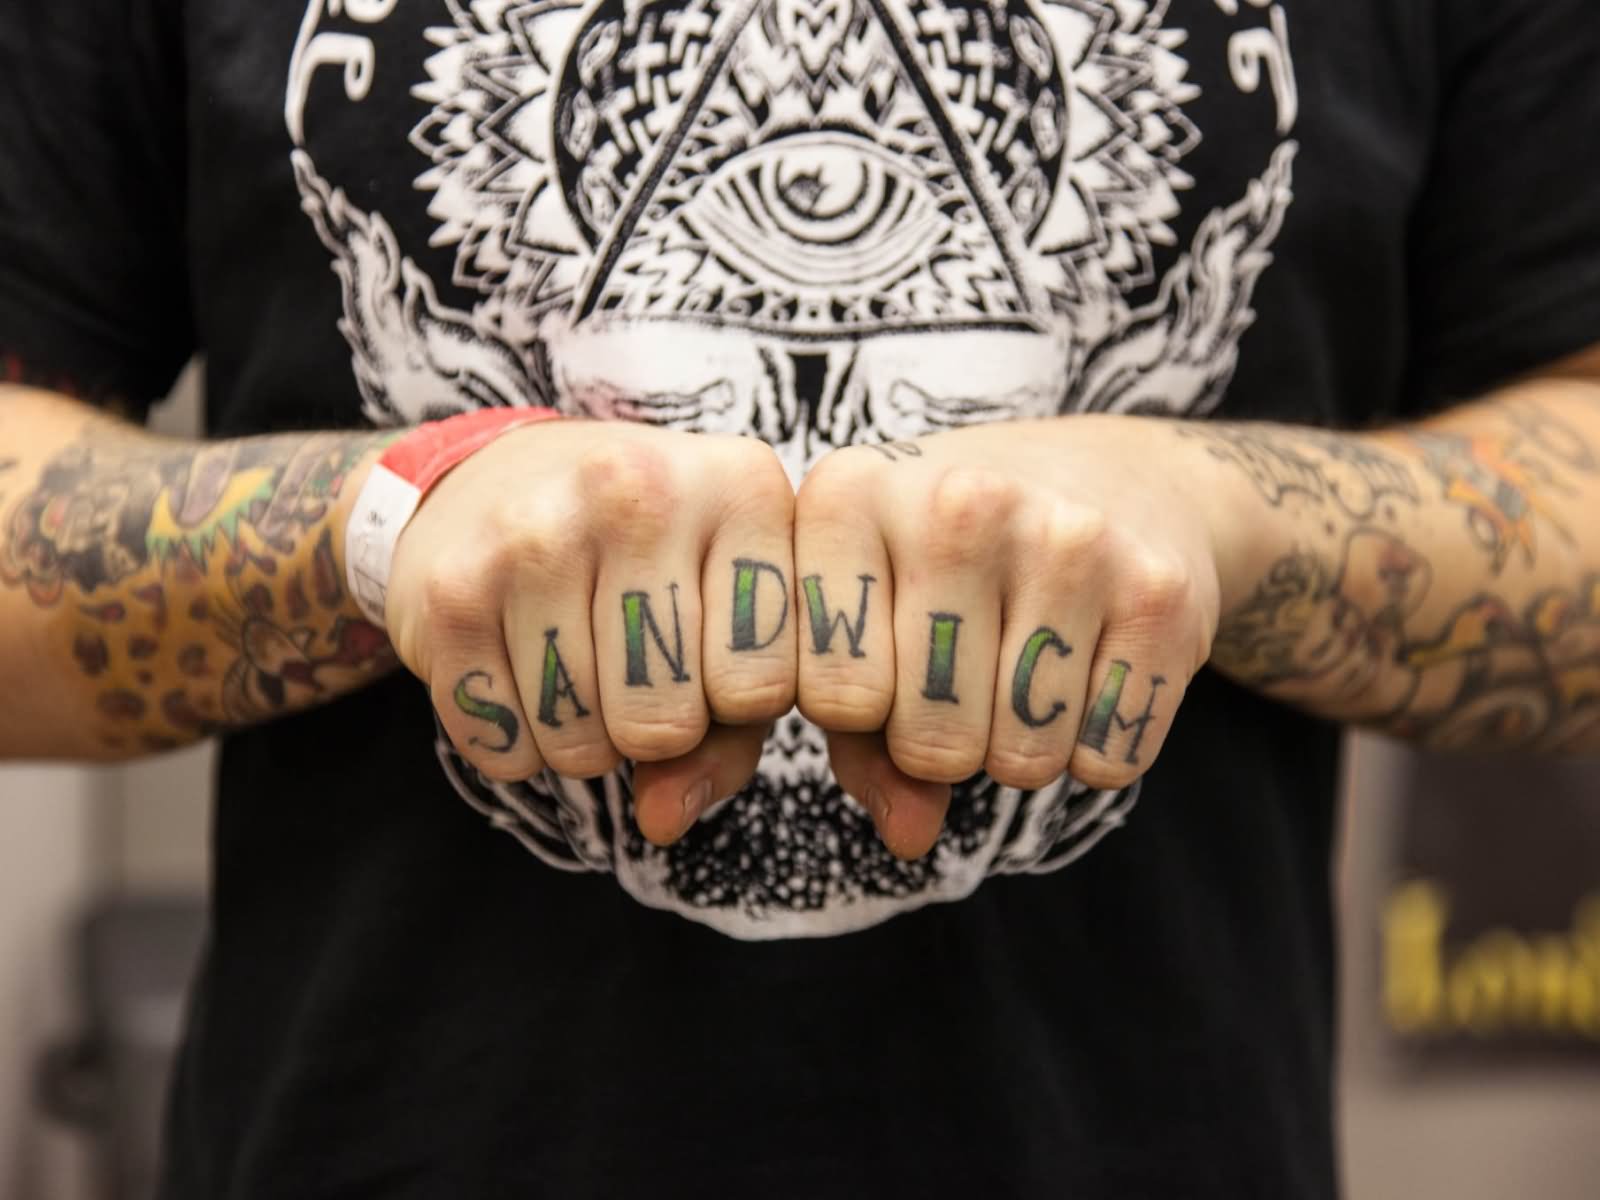 Sandwich Knuckle Tattoo For Men